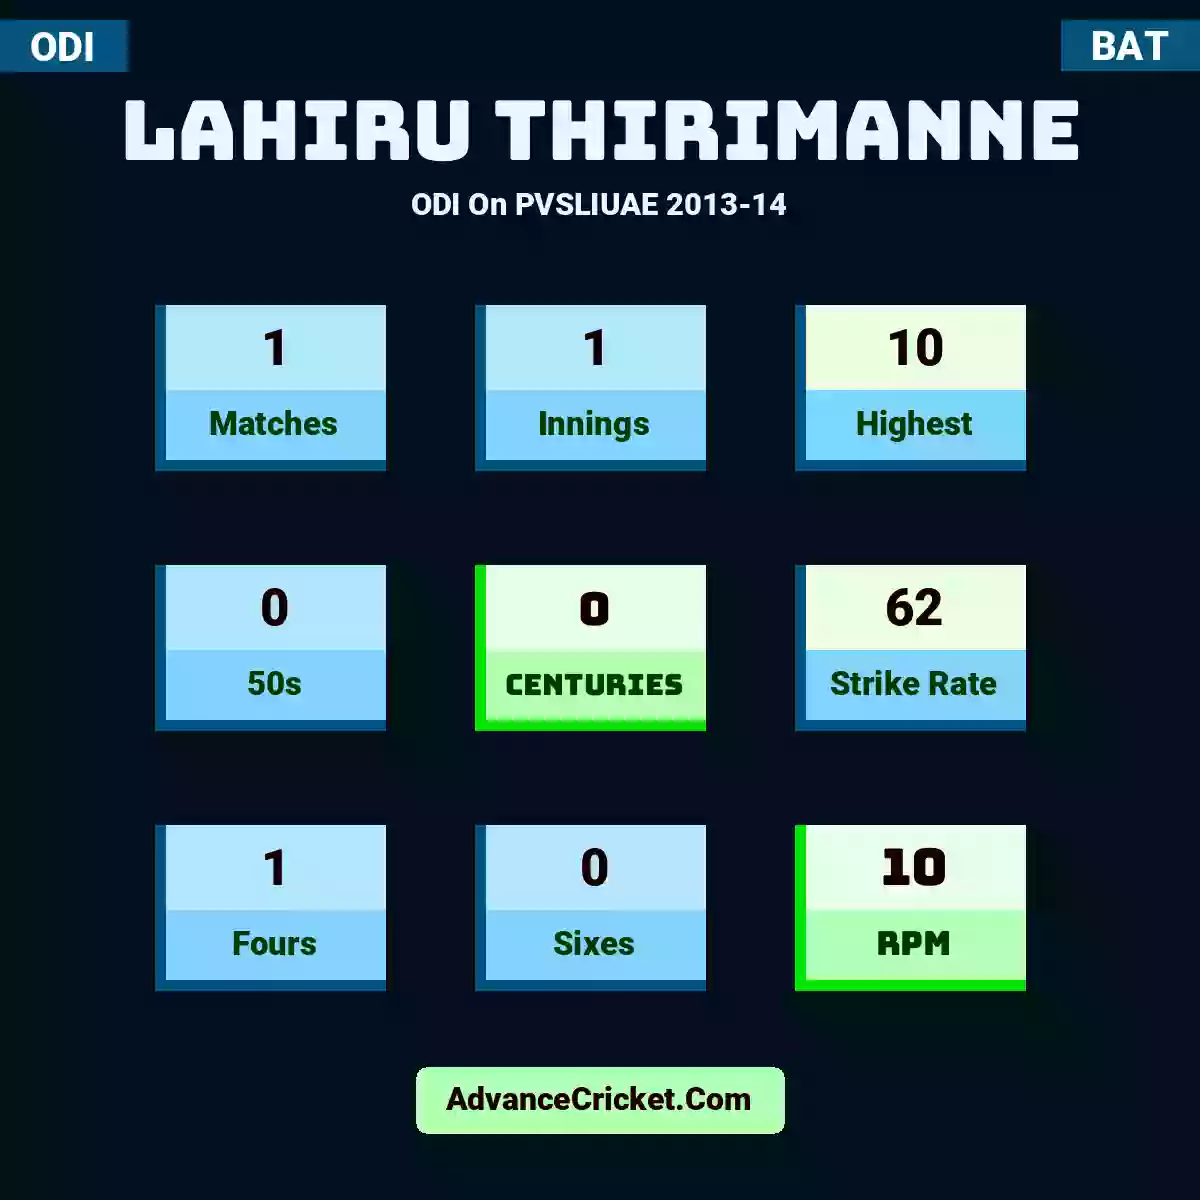 Lahiru Thirimanne ODI  On PVSLIUAE 2013-14, Lahiru Thirimanne played 1 matches, scored 10 runs as highest, 0 half-centuries, and 0 centuries, with a strike rate of 62. L.Thirimanne hit 1 fours and 0 sixes, with an RPM of 10.